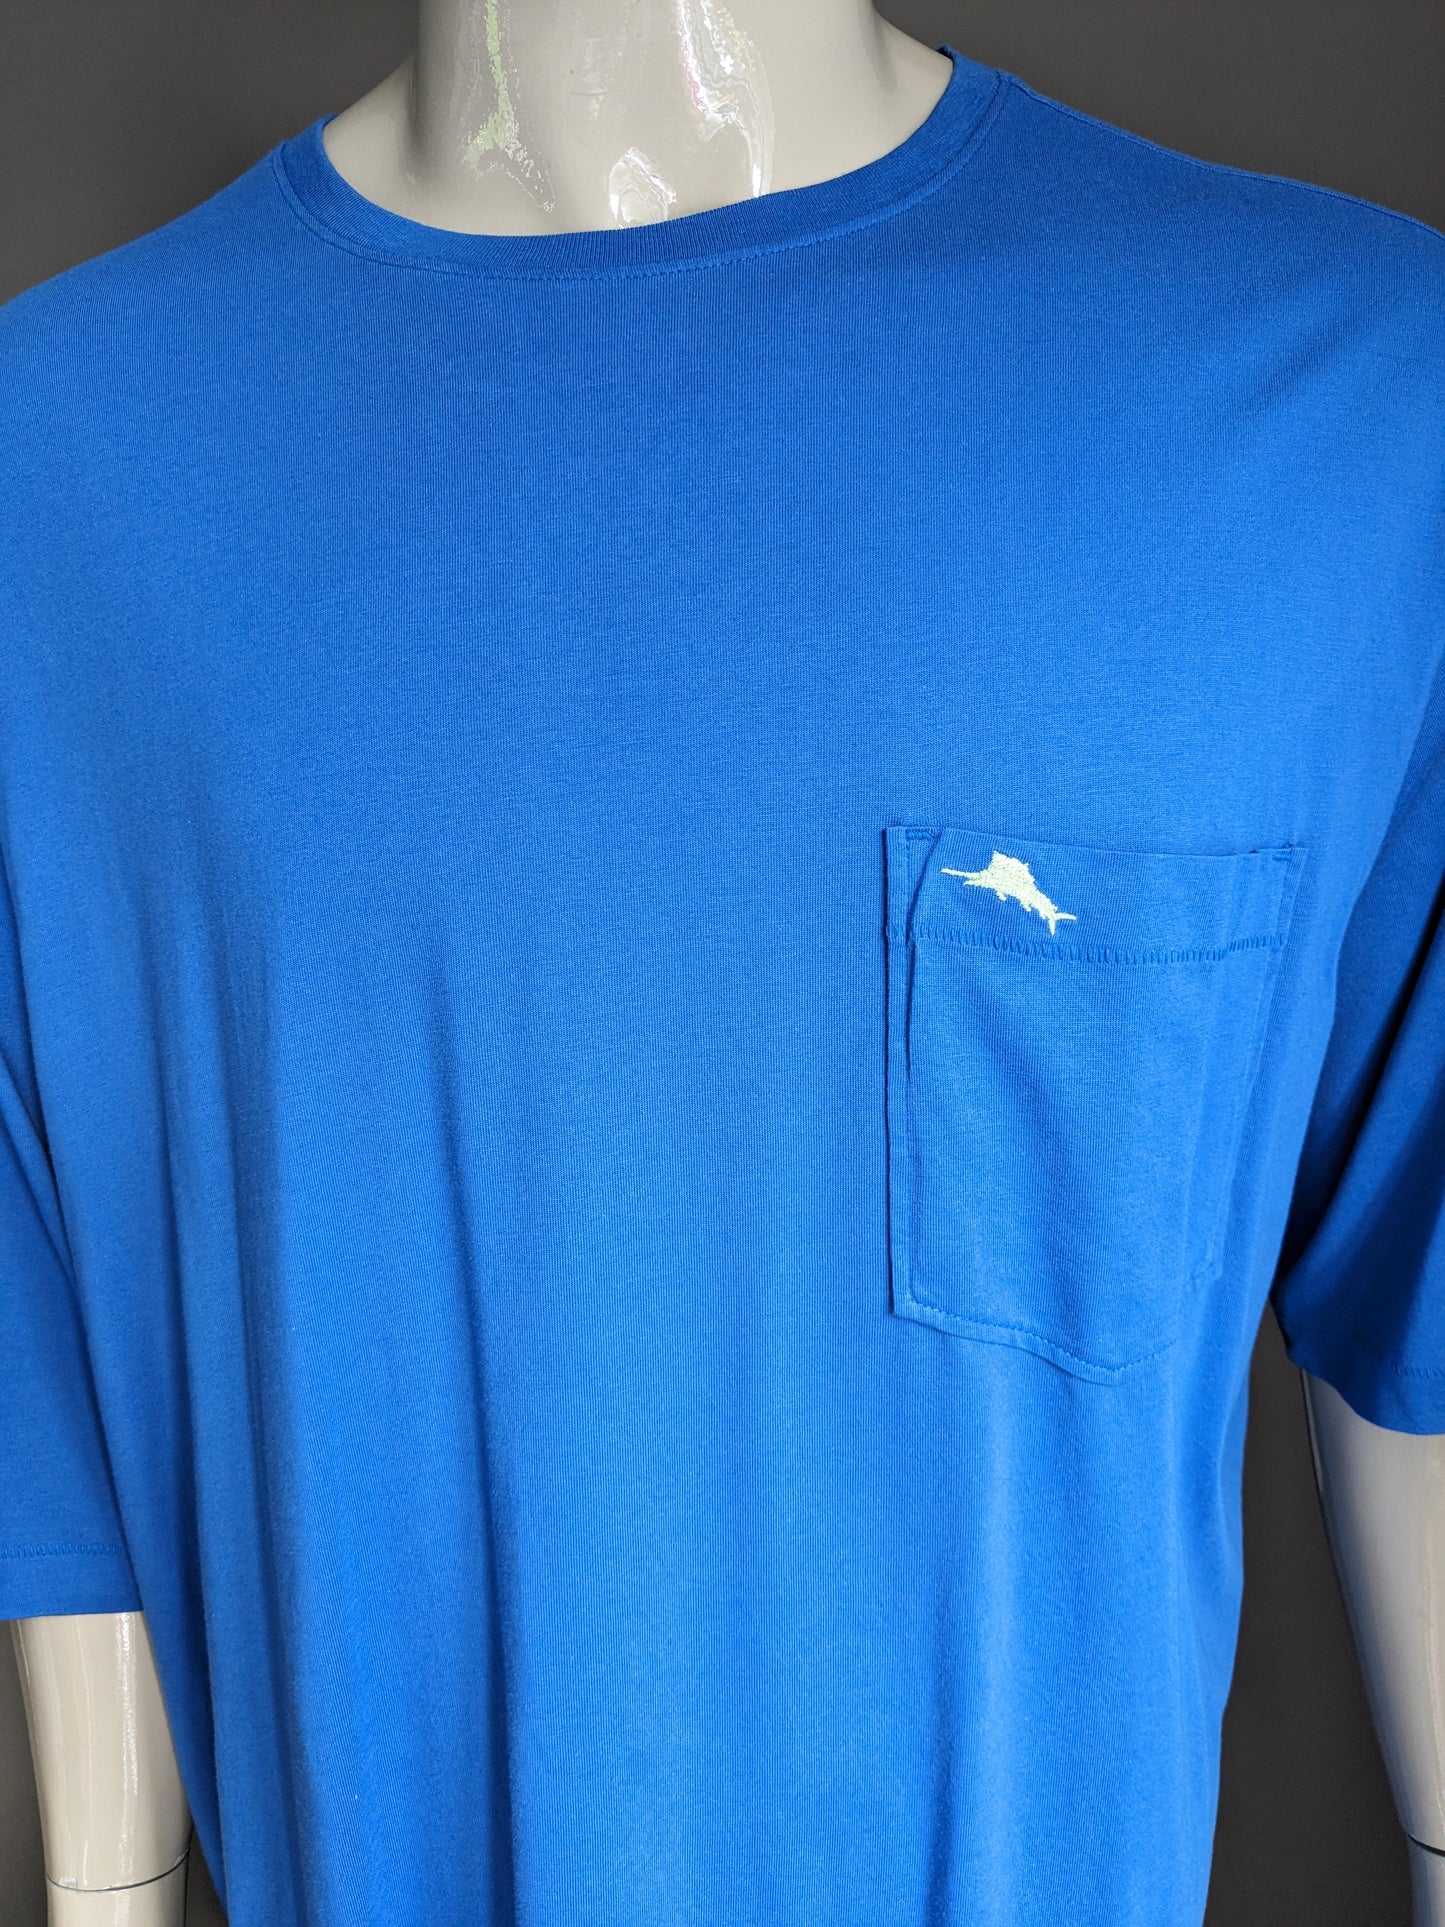 Tommy Bahama Relax Shirt. Colorato blu. Dimensione 2xl / 3xl.